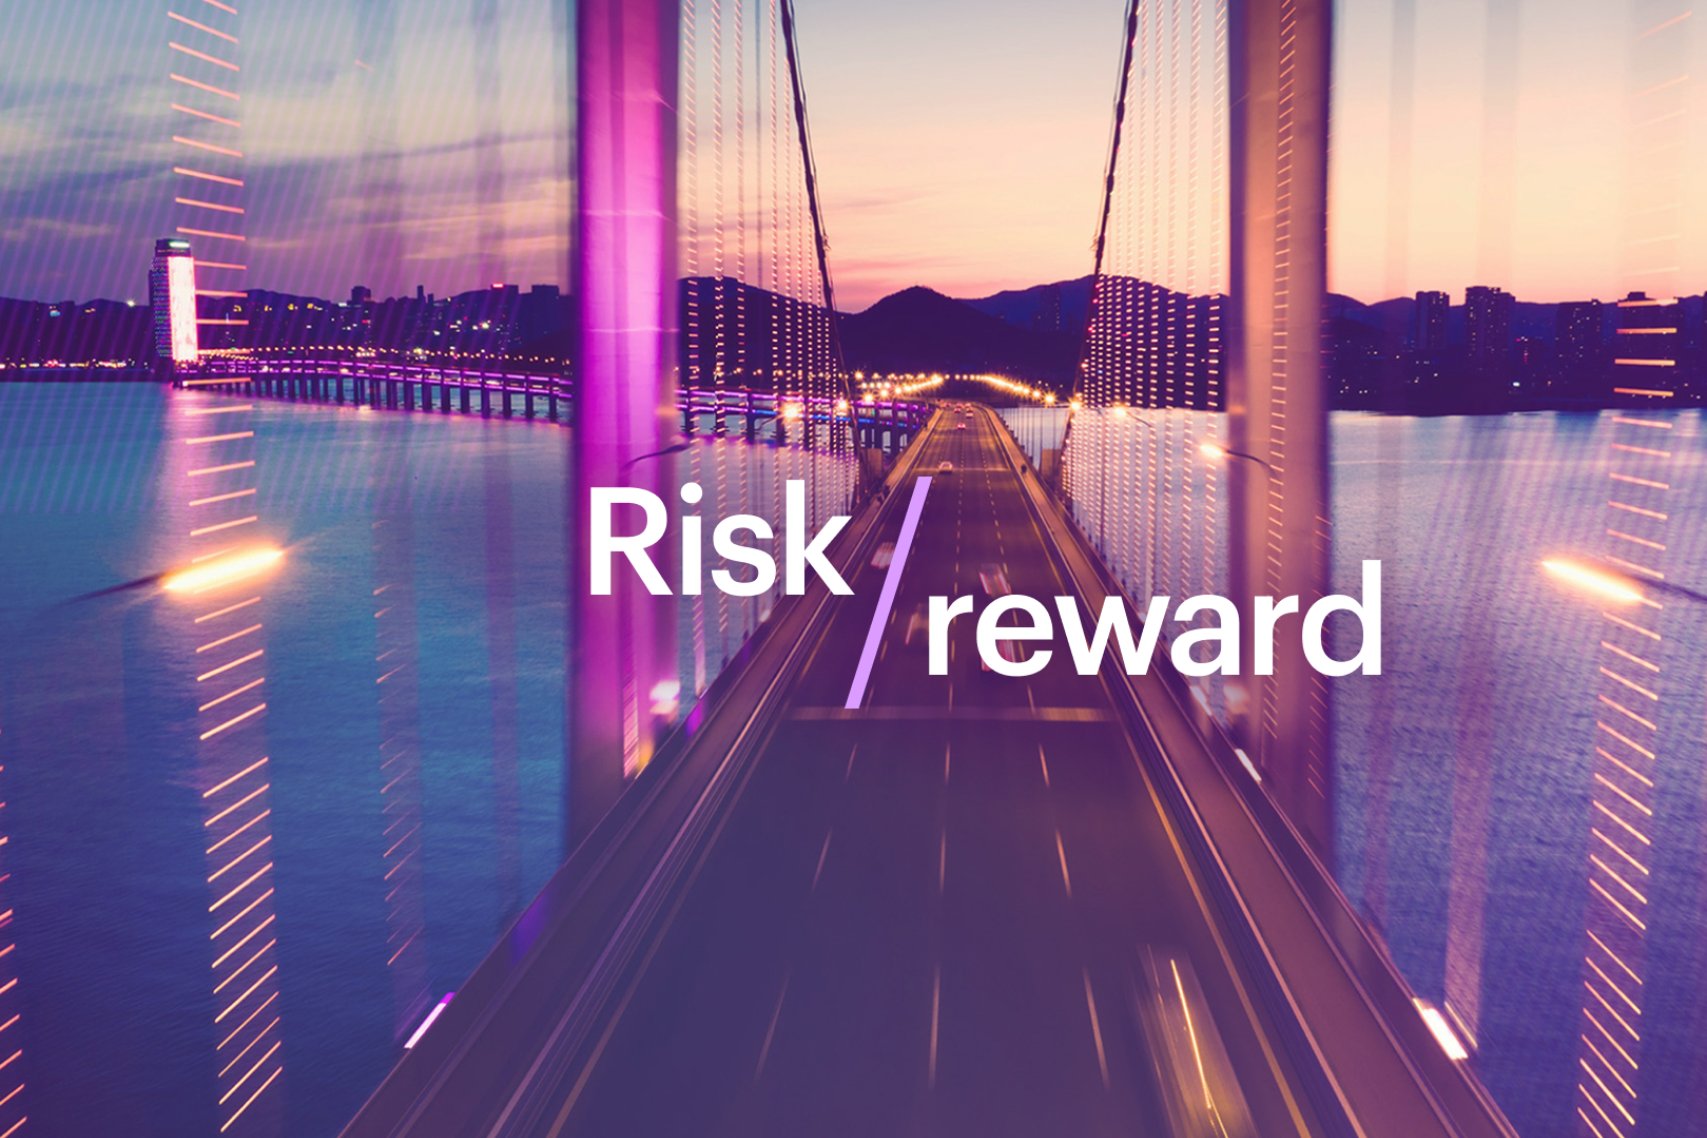 Risk / reward